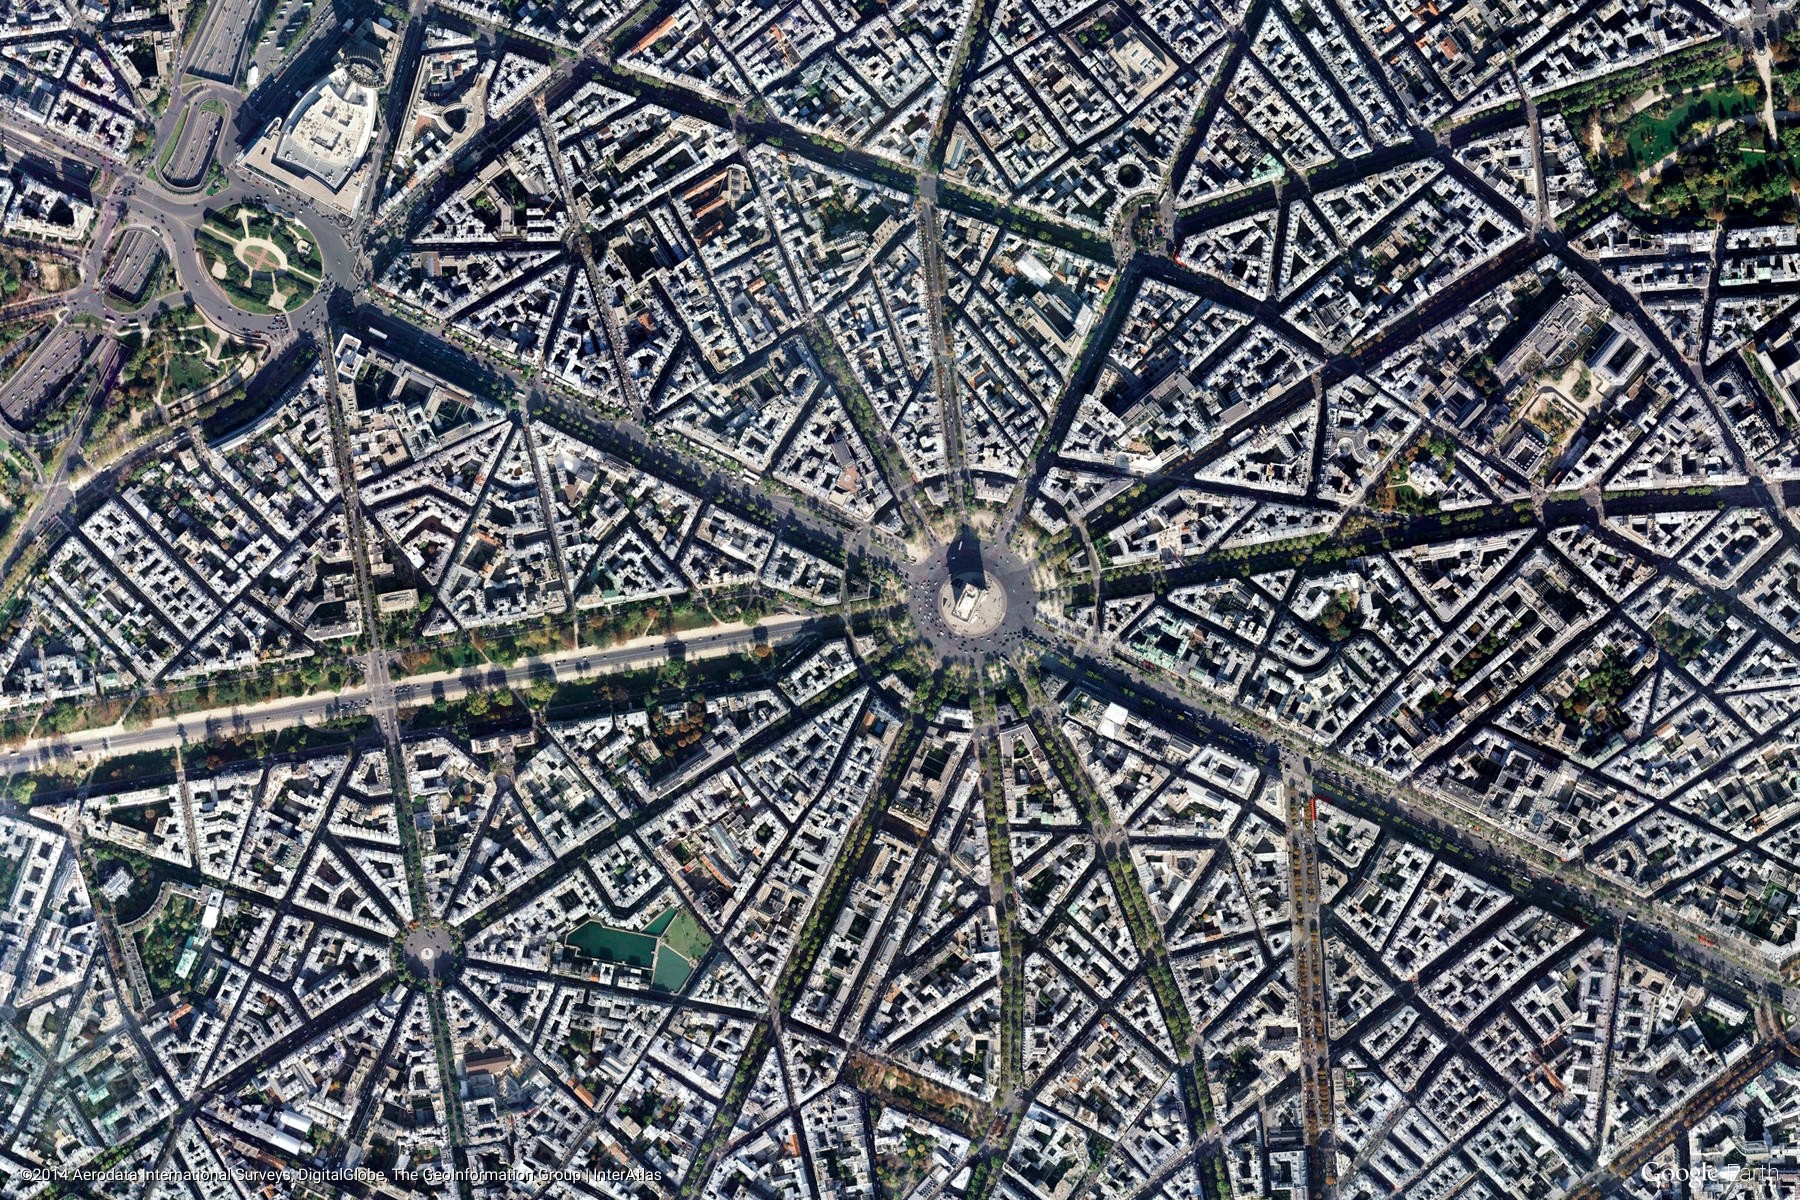 General 1800x1200 Google nature satellite photo landscape watermarked Paris France